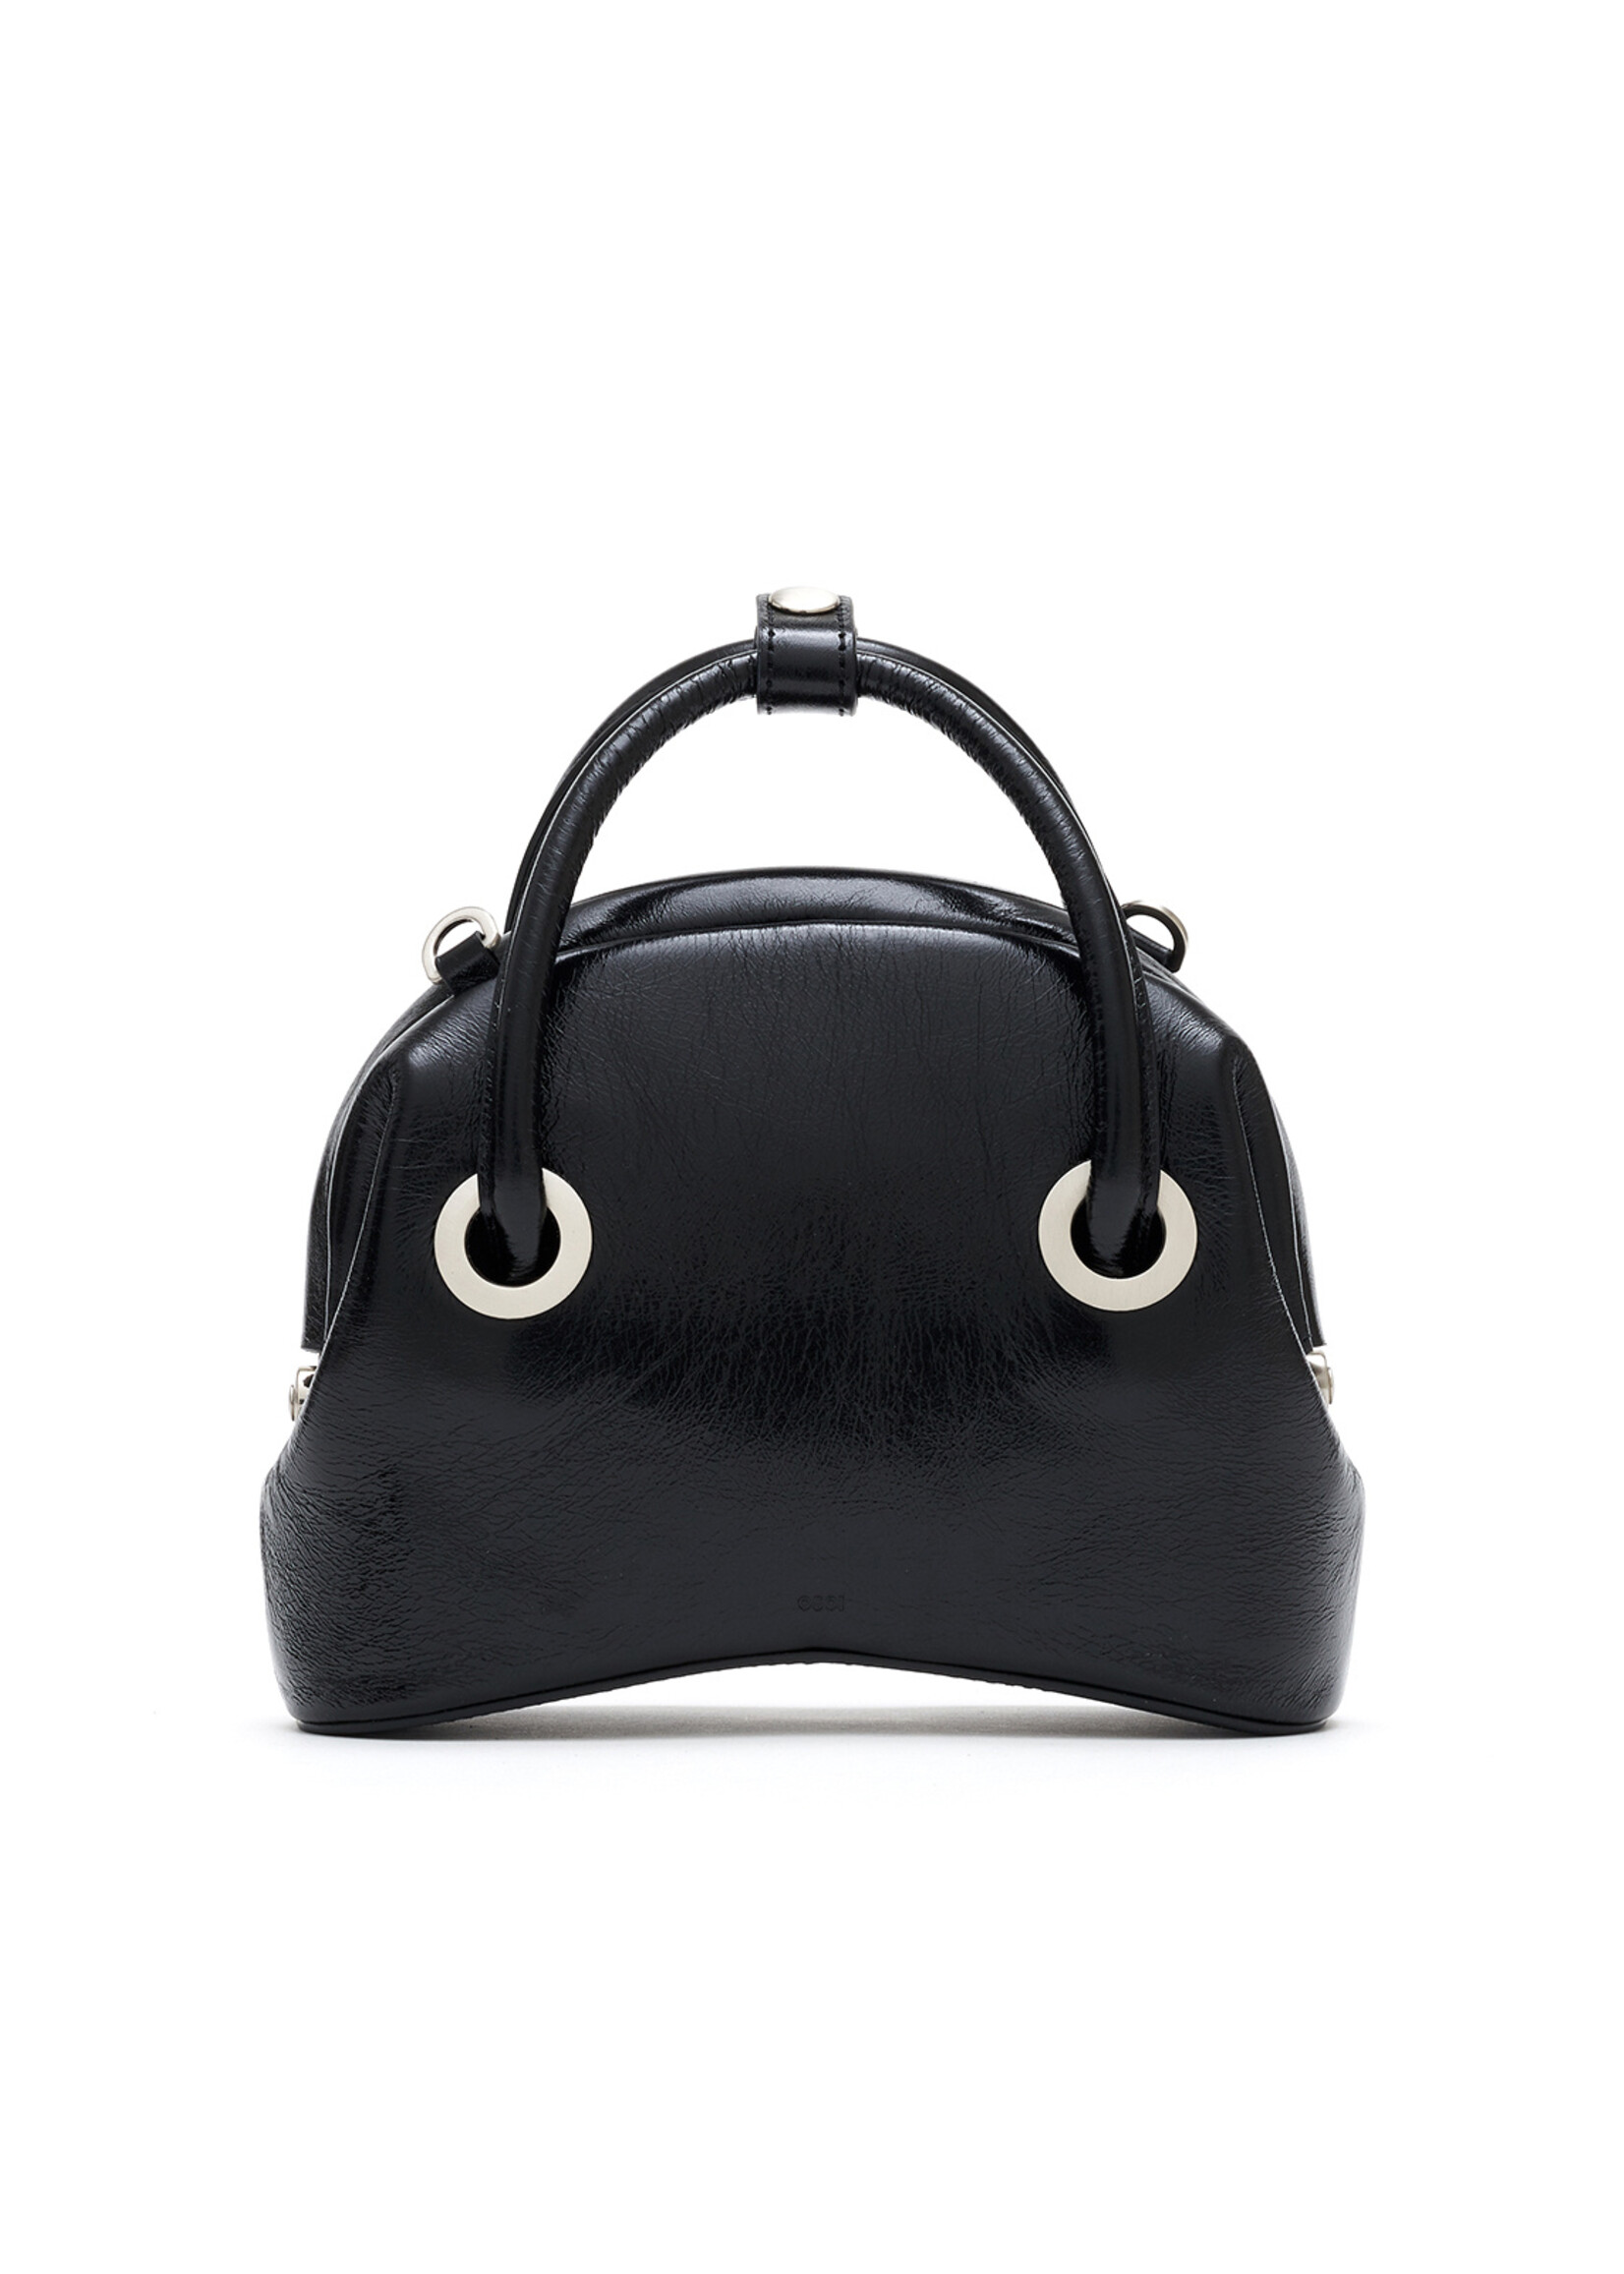 OSOI Circle Mini Bag in Washed Black Leather